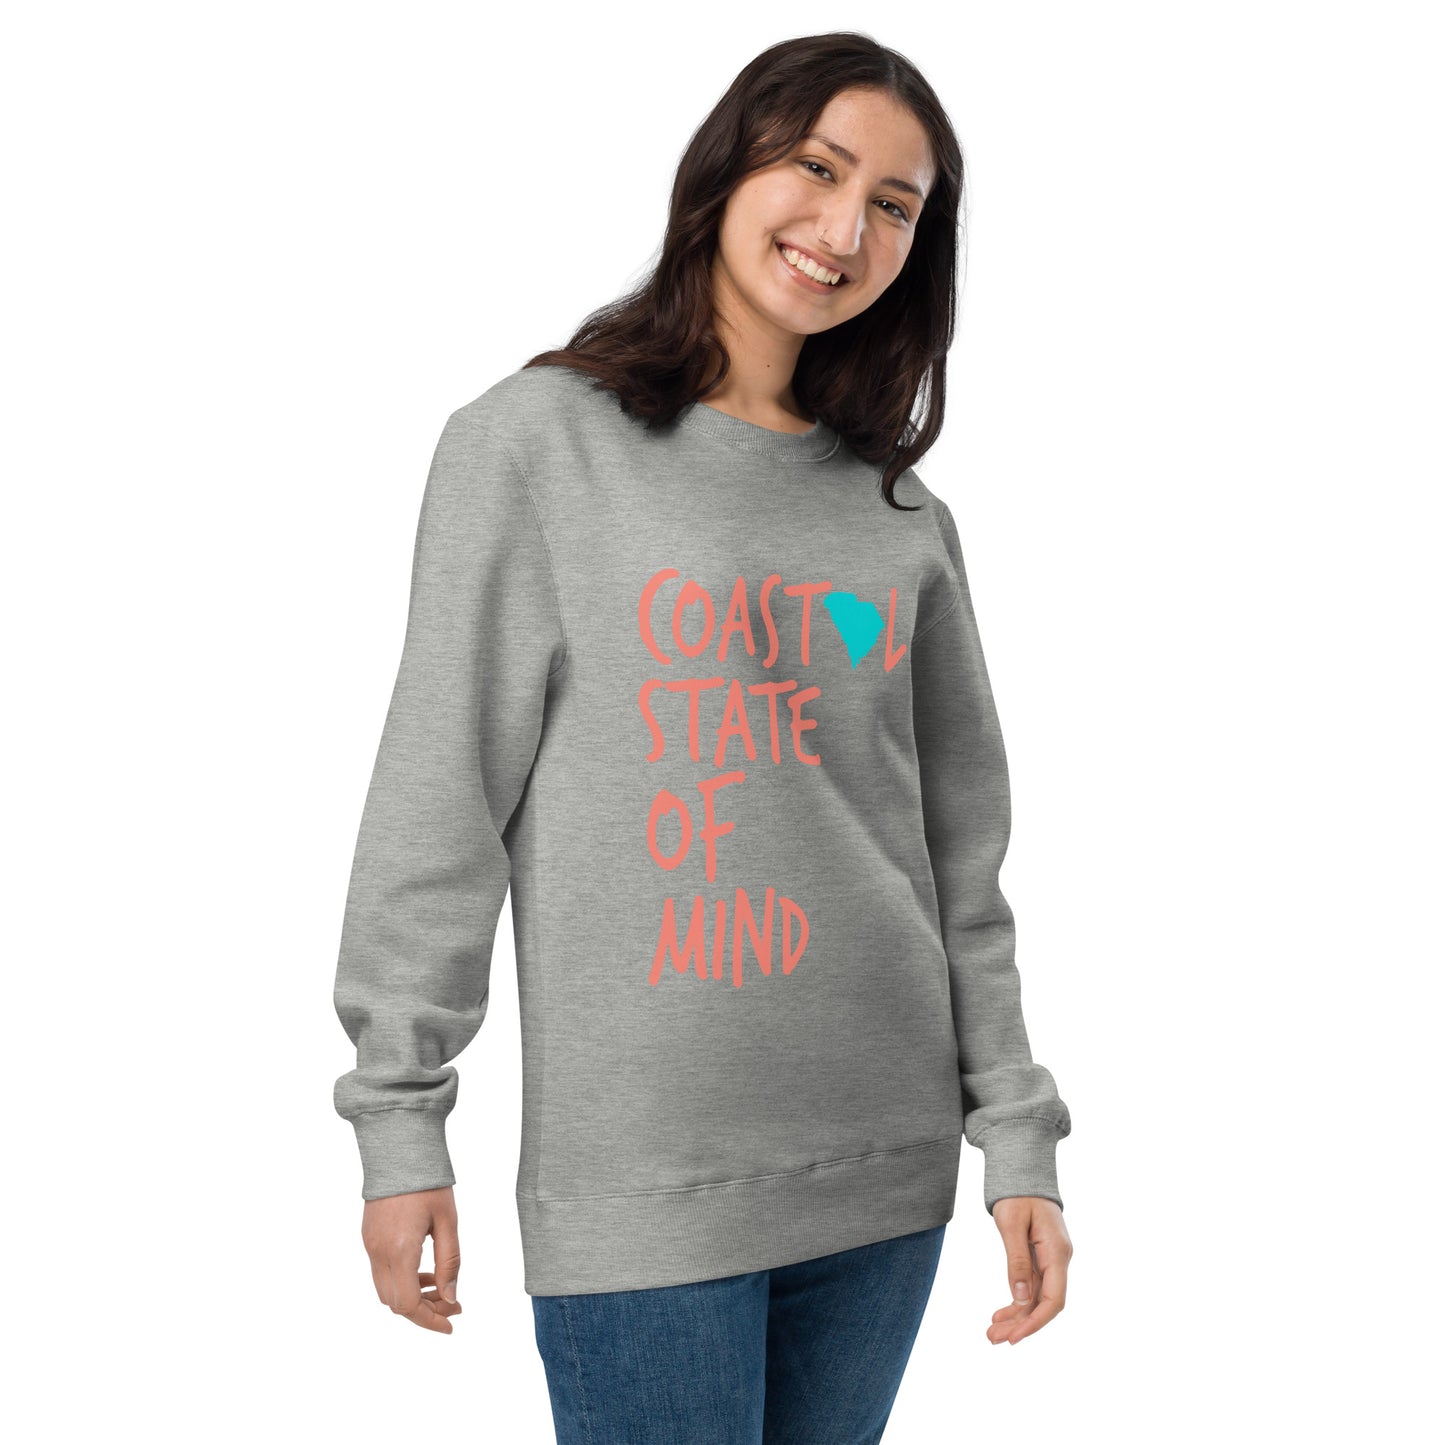 Coastal State of Mind South Carolina™ Fashion Sweatshirt